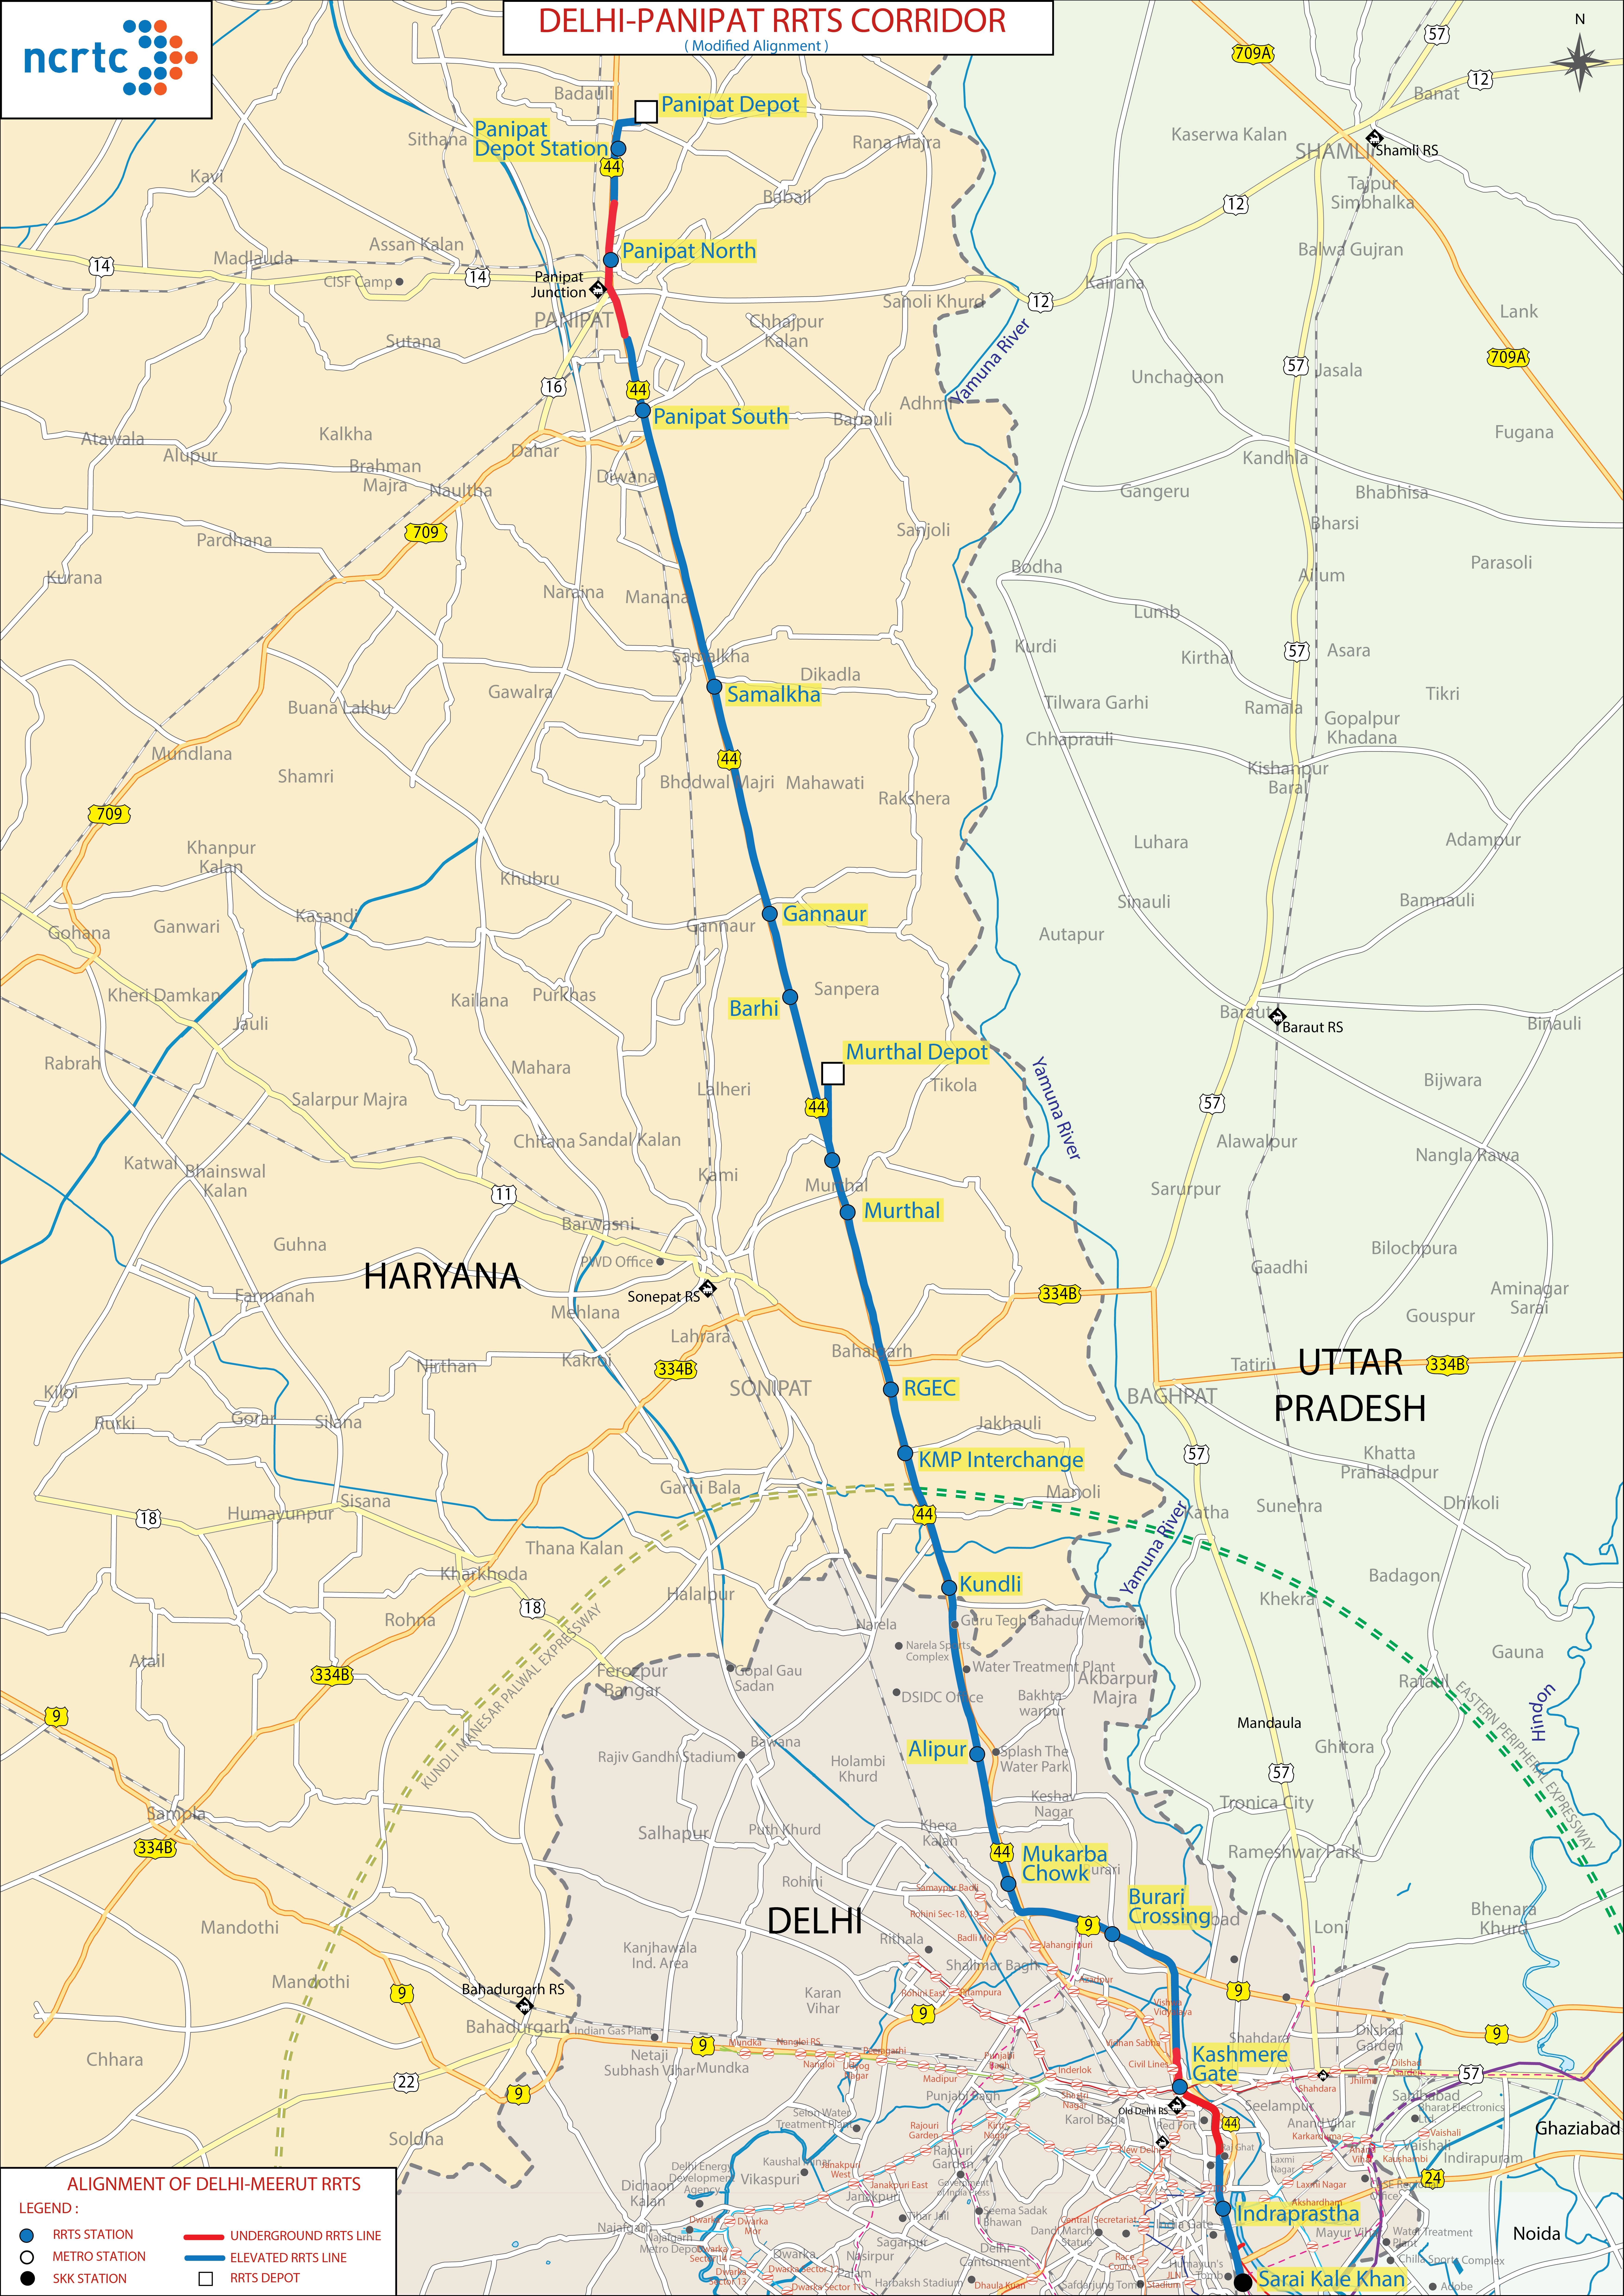 Delhi to Panipat Corridor (Copy)